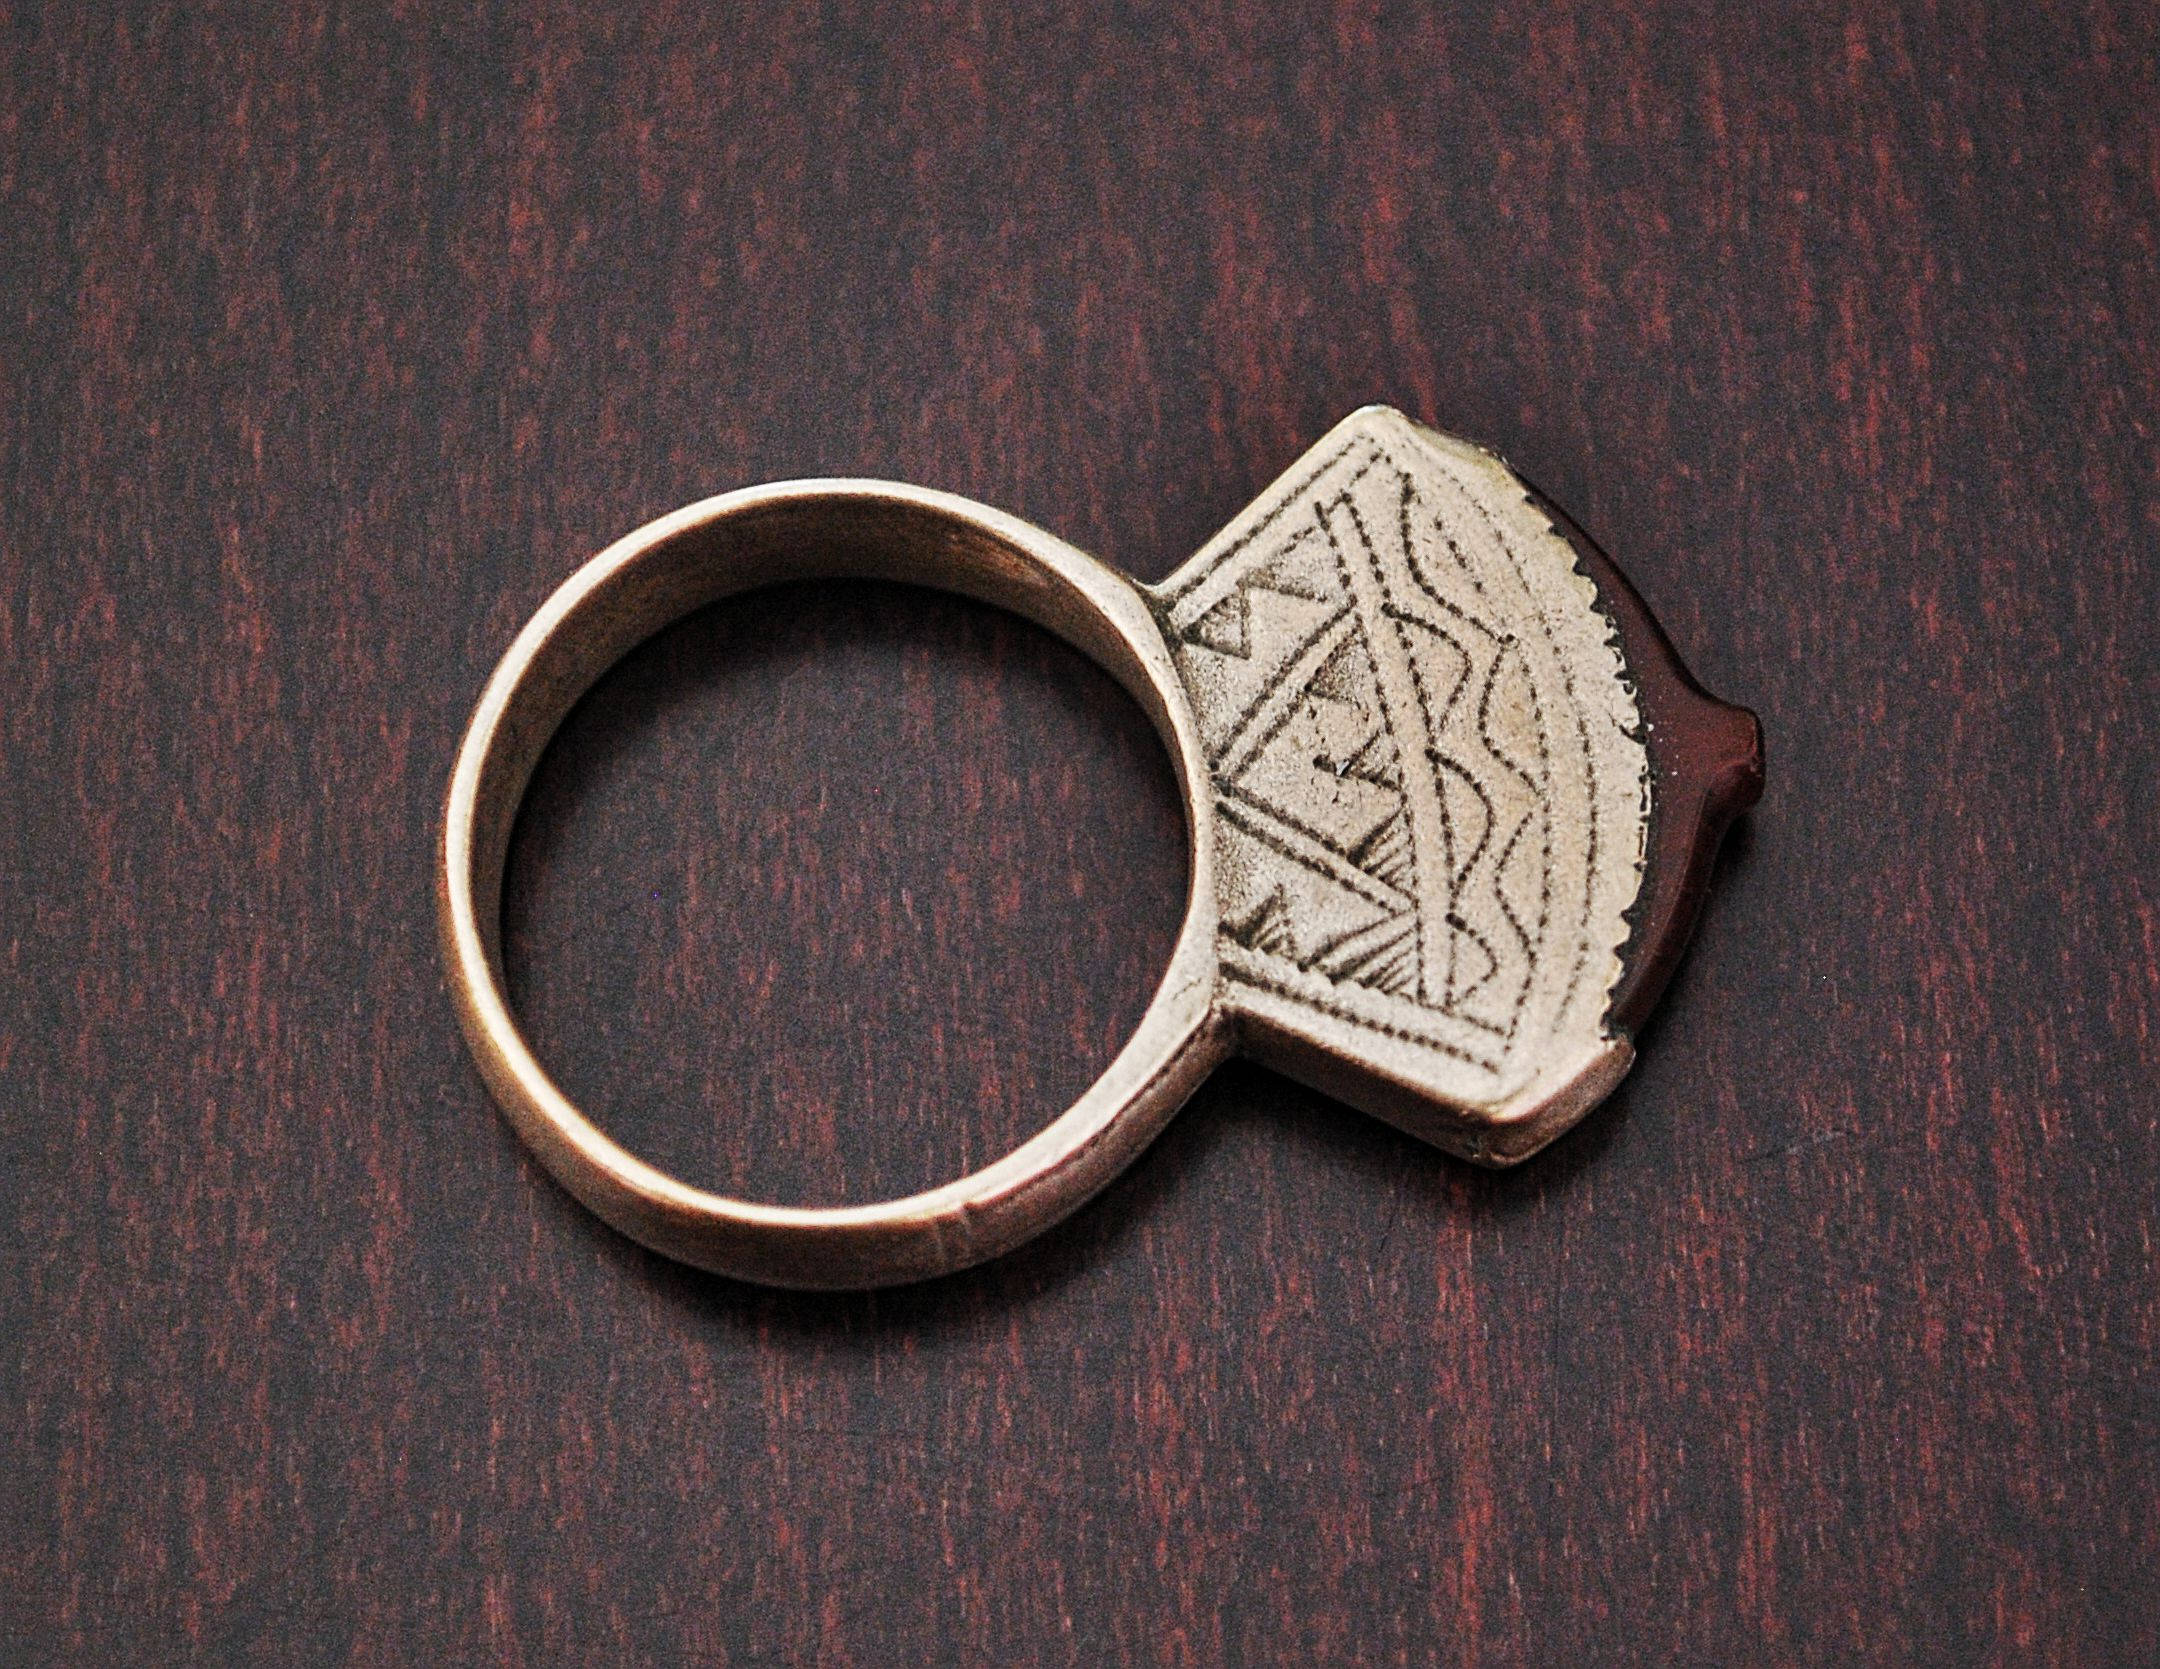 Tuareg Tisek Silver Ring With Carnelian - Size 10 - Tuareg Silver Ring - Tuareg Jewelry - Ethnic Tribal Ring